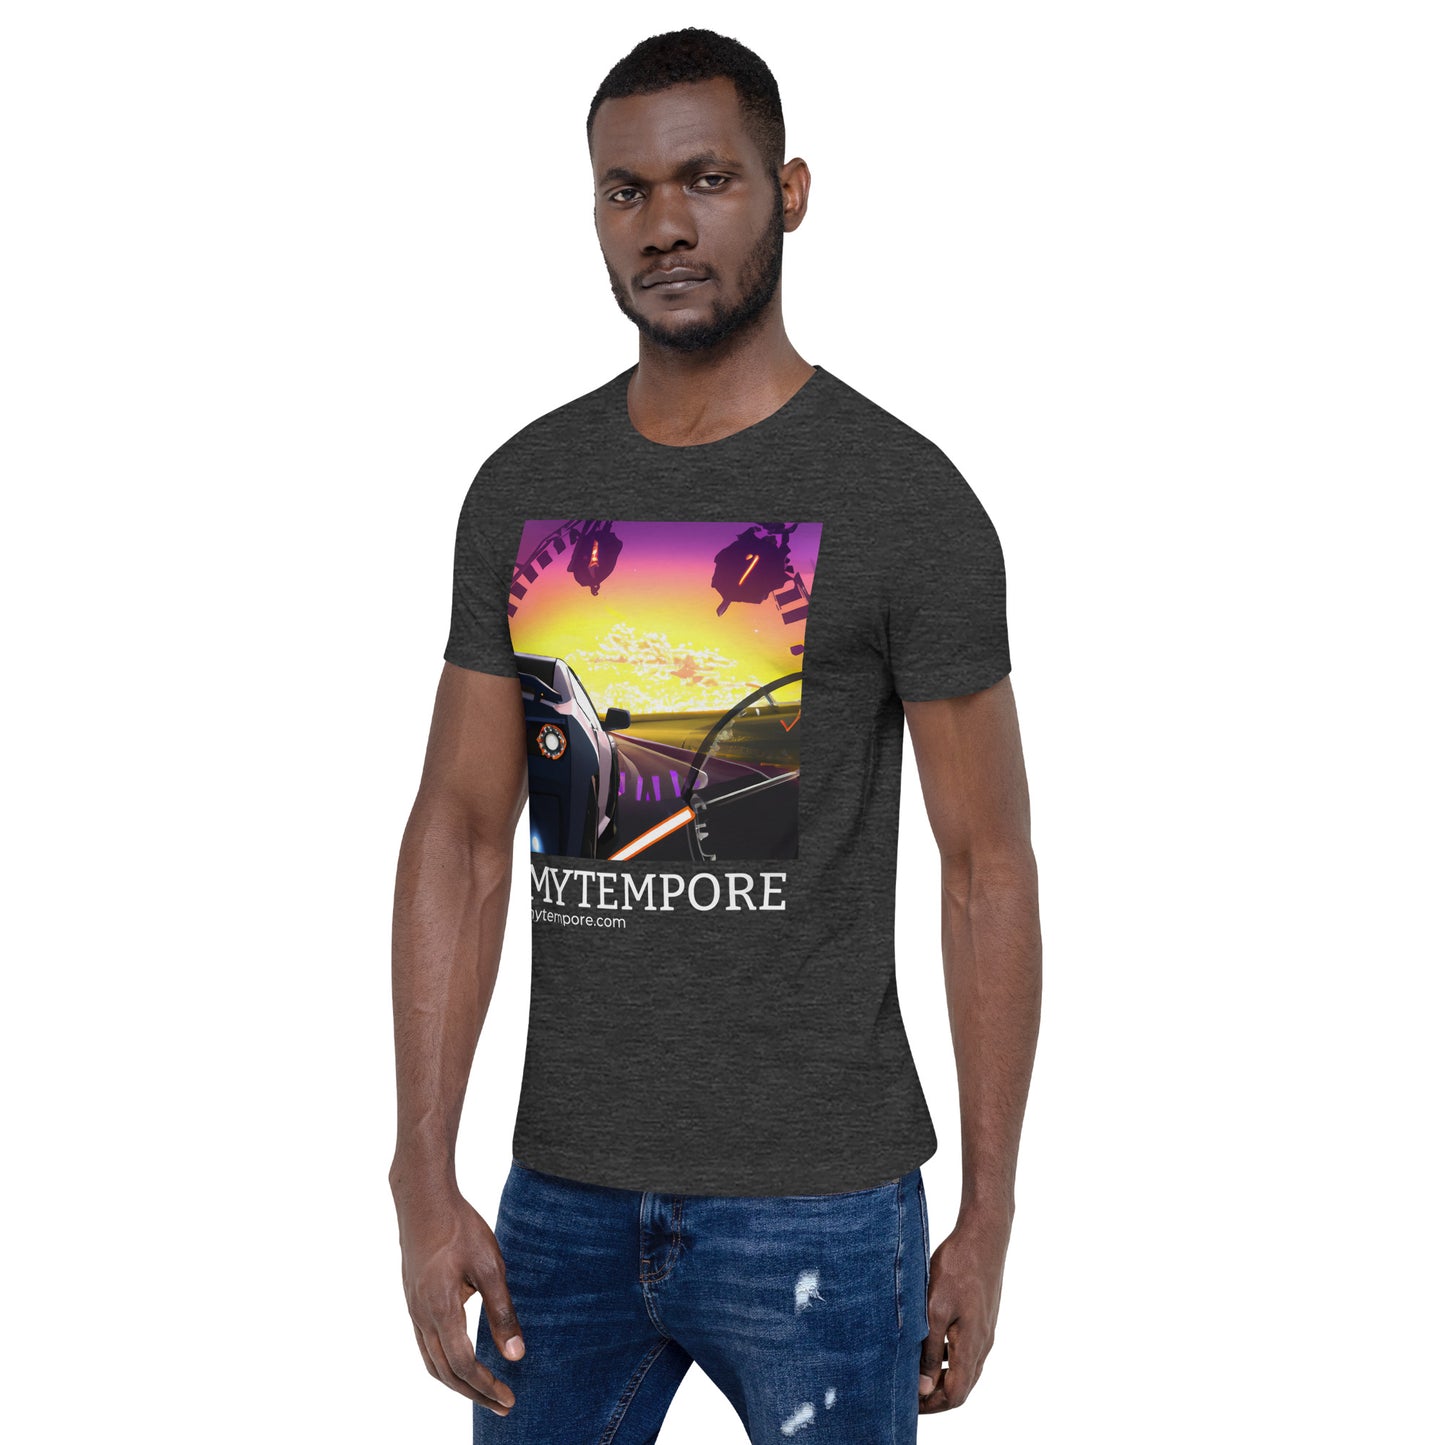 "MYTEMPORE" DRIVING INTO SUNSET Unisex t-shirt